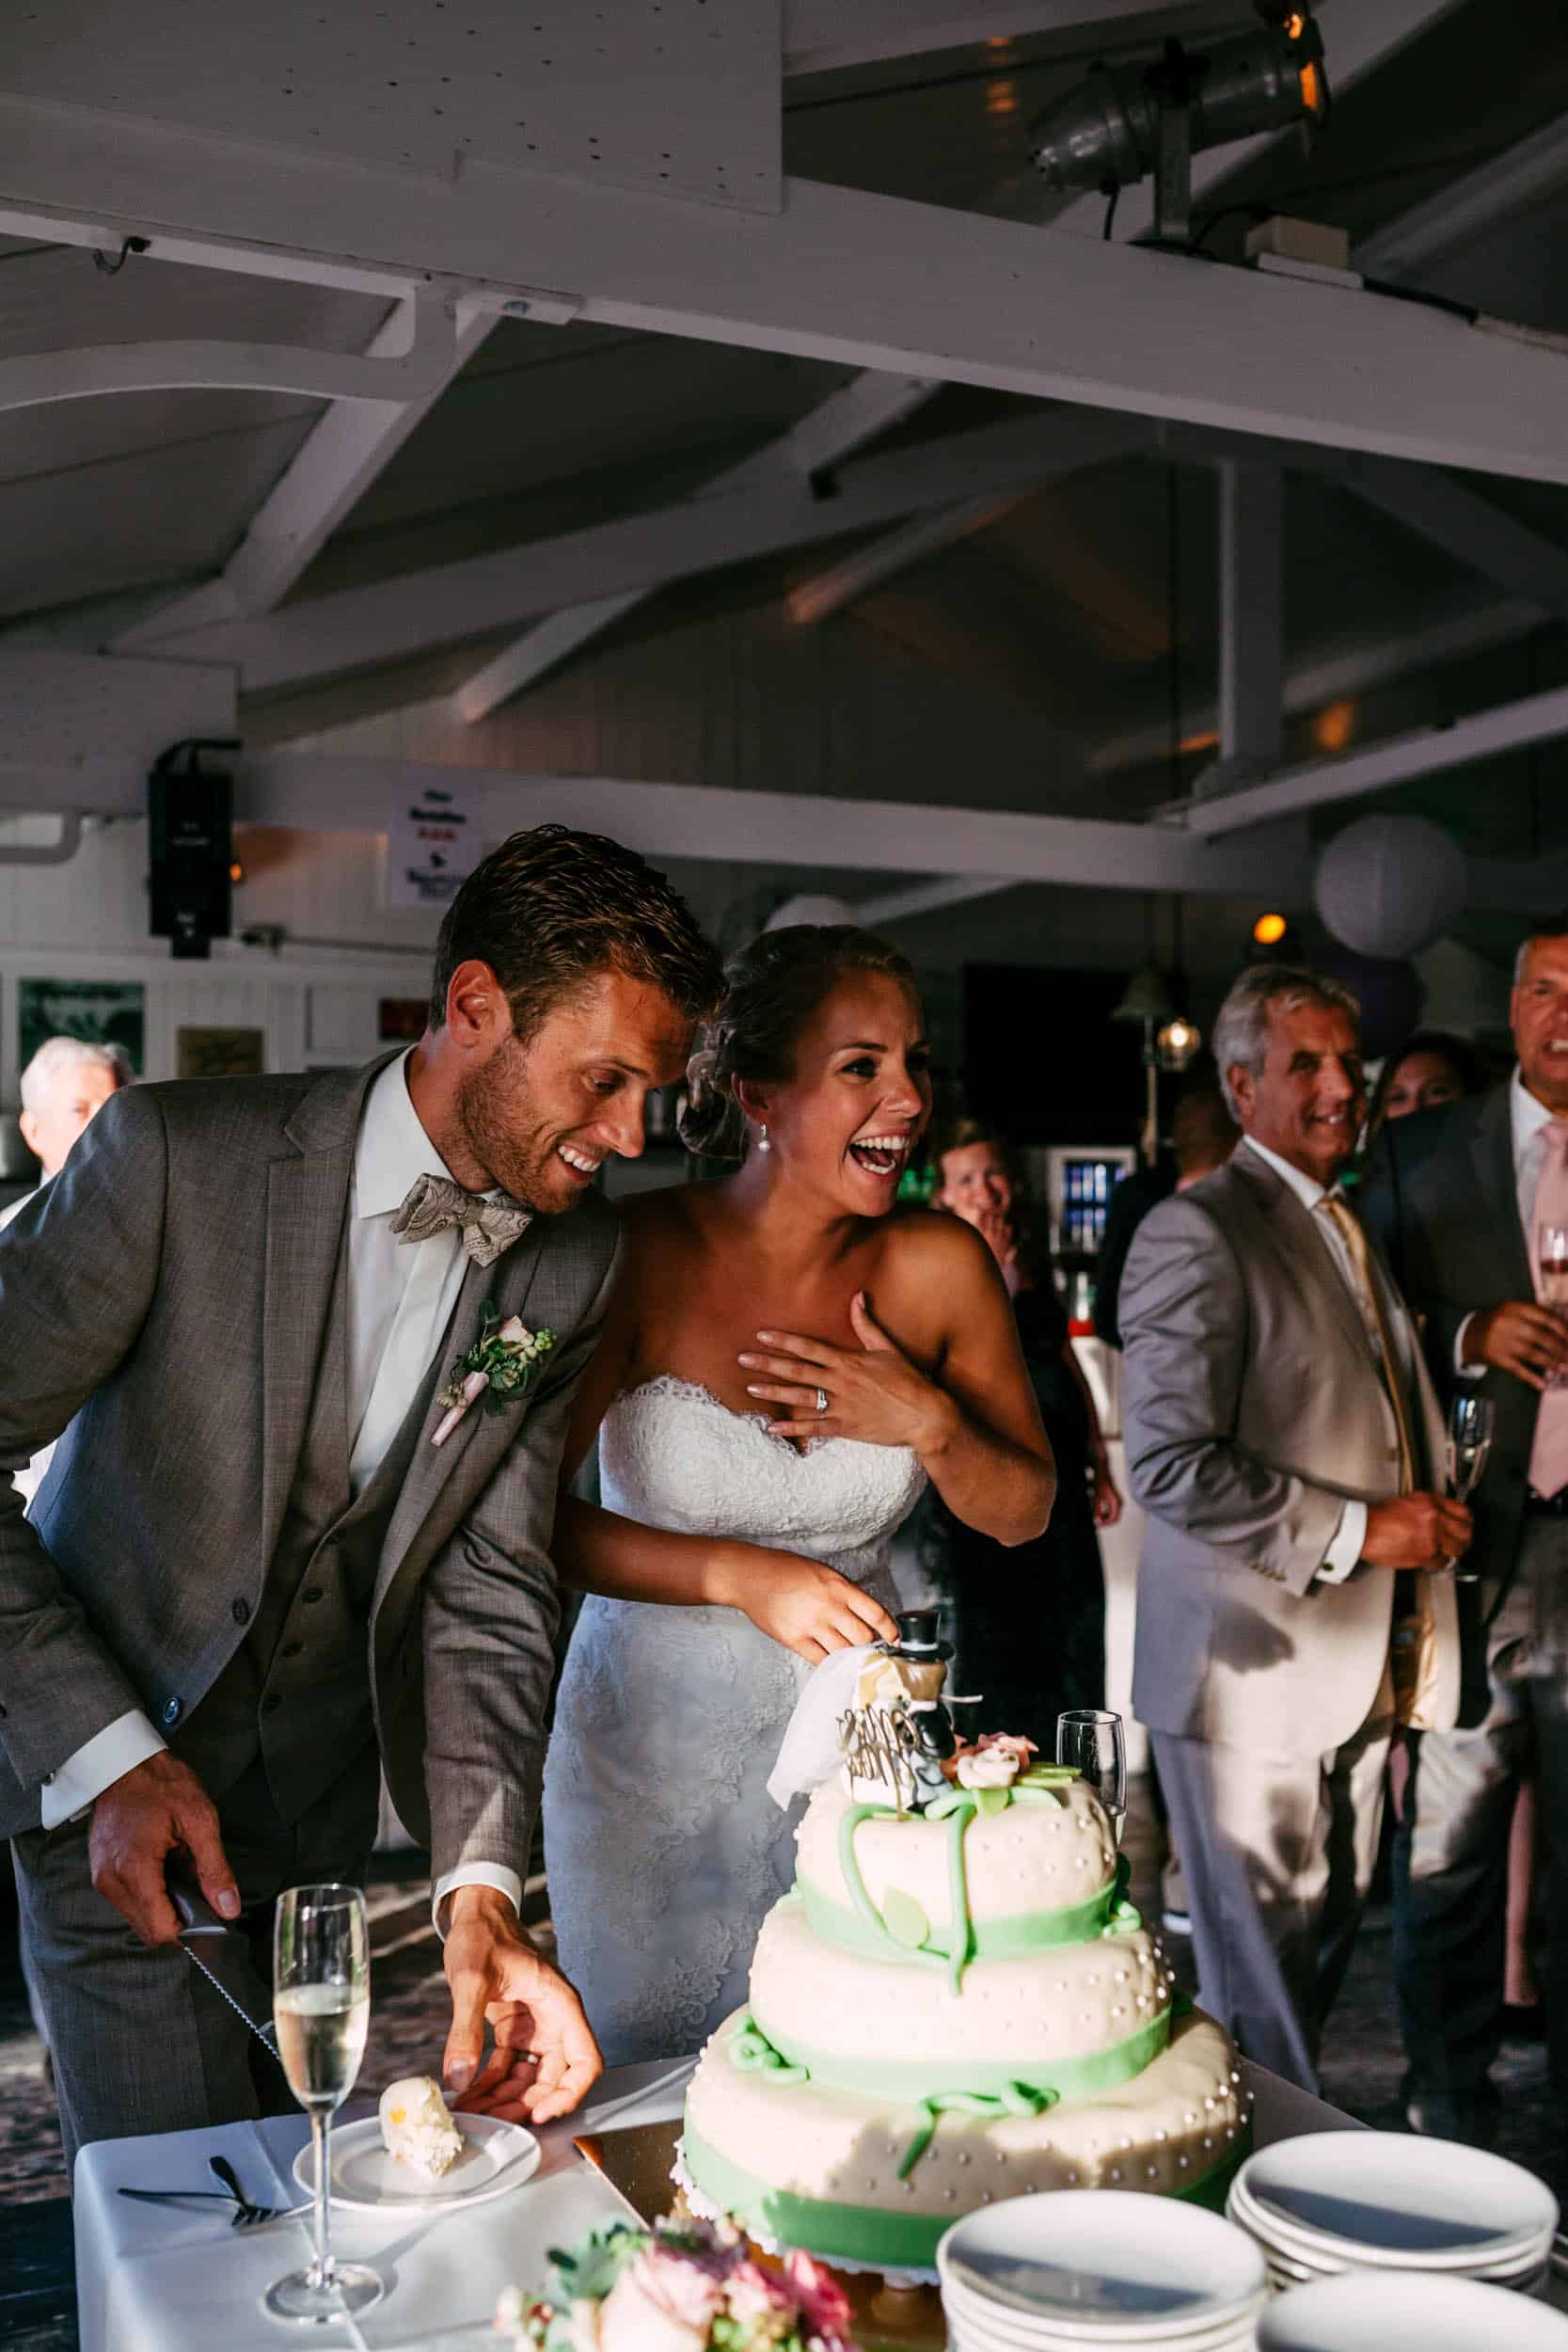 A bride and groom cut their wedding cake.